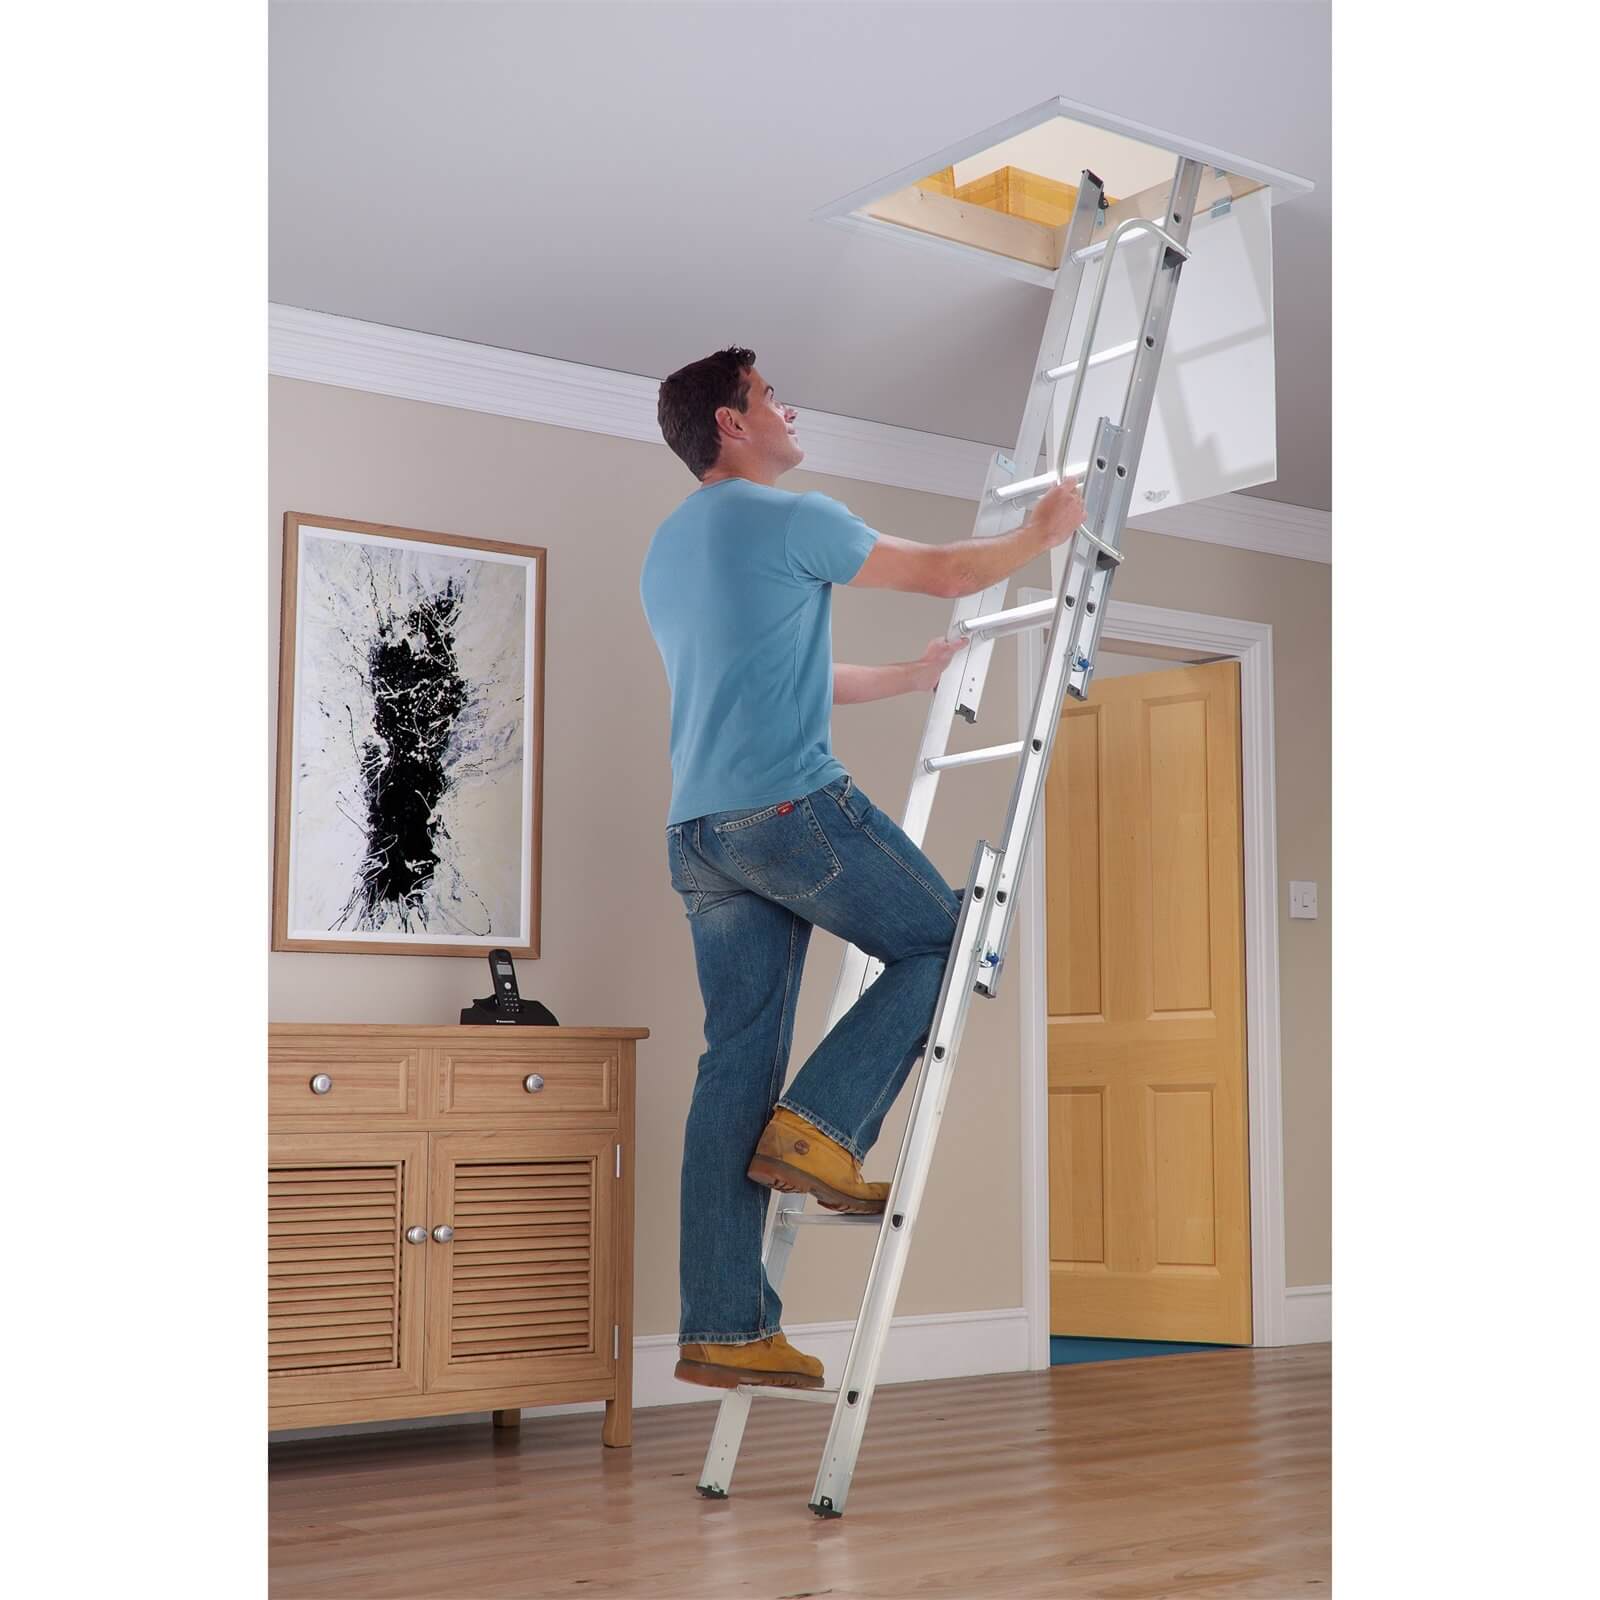 Abru 3 Section Loft Ladder with Handrail